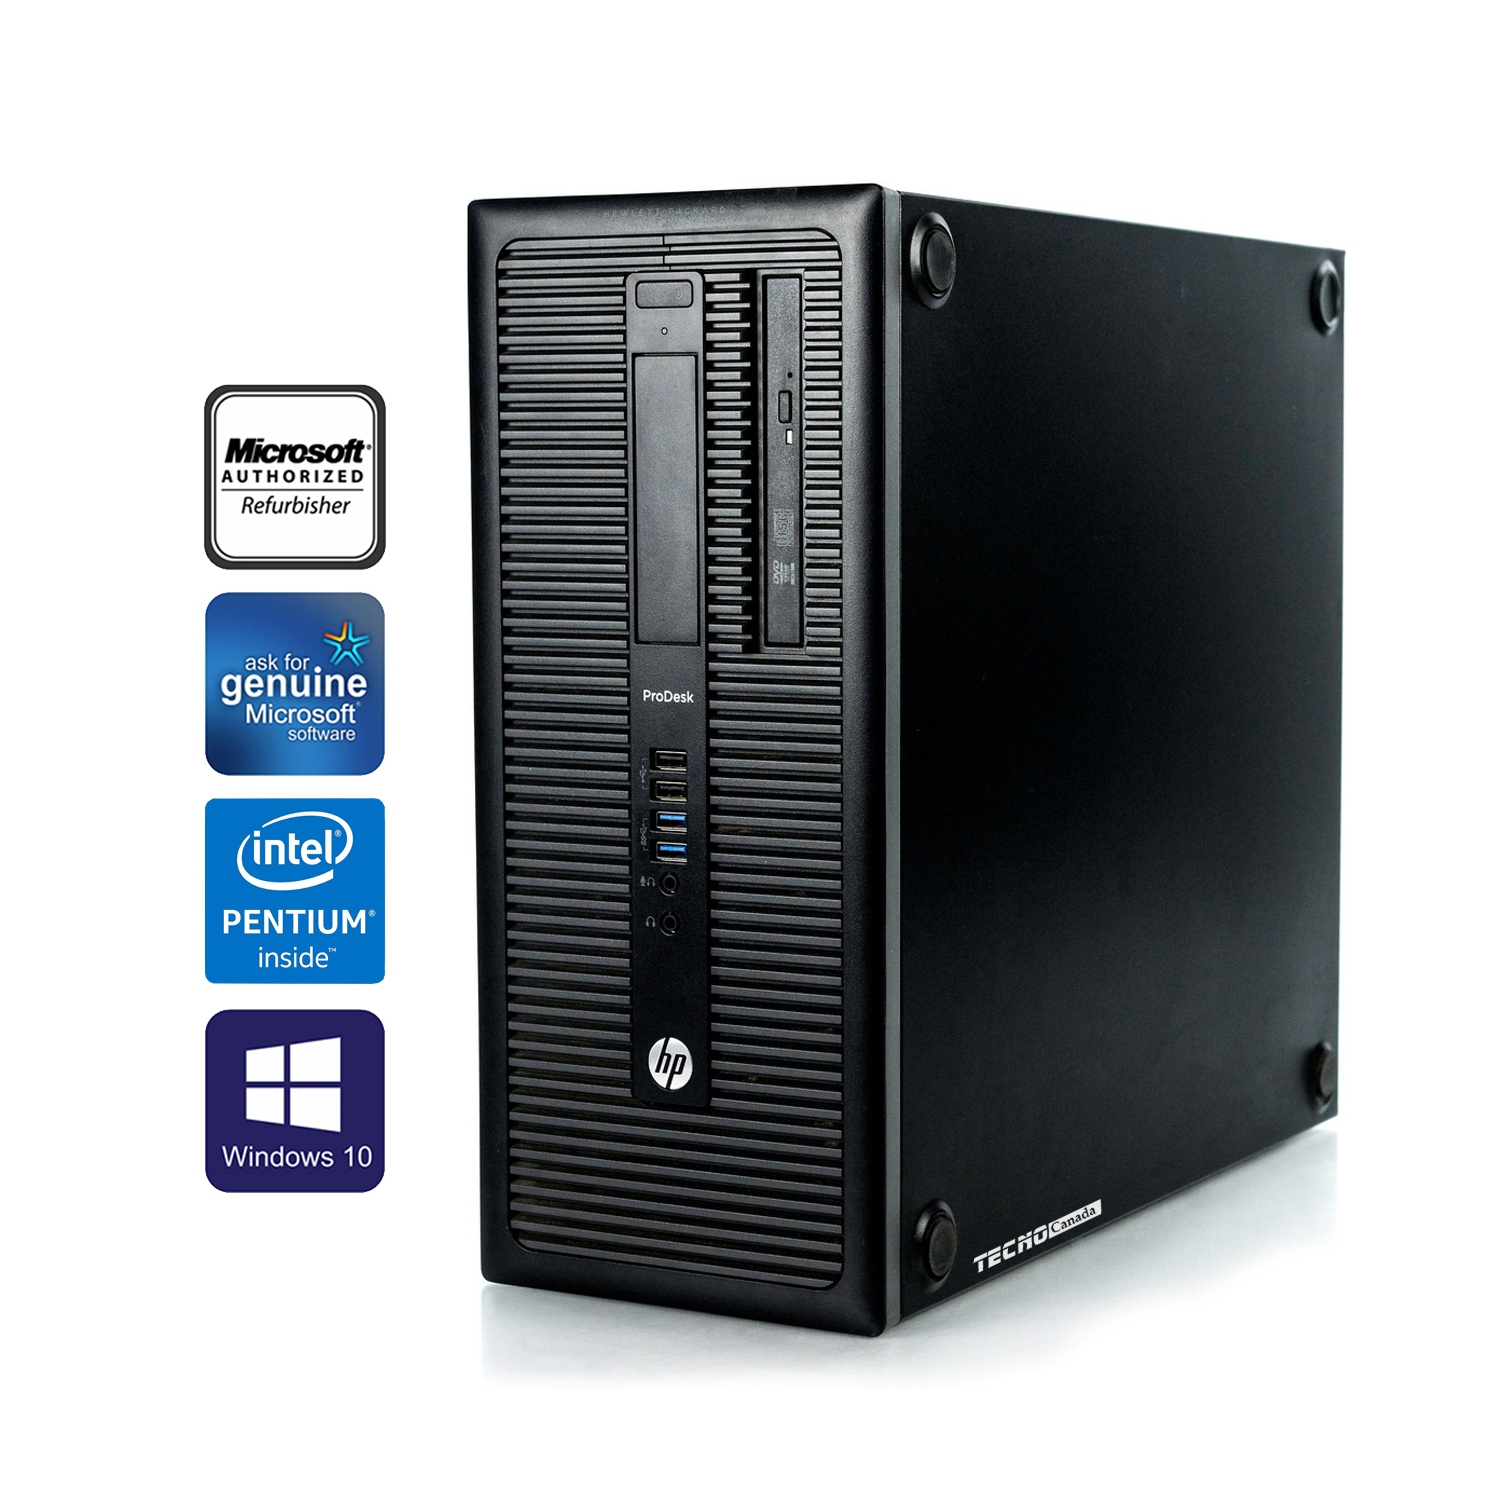 Refurbished (Good) - HP 600 G1 Tower Desktop intel i7 4770@3.2GHz 8GB RAM 320GB SSD Win 10 Home WiFi(2014 Model)